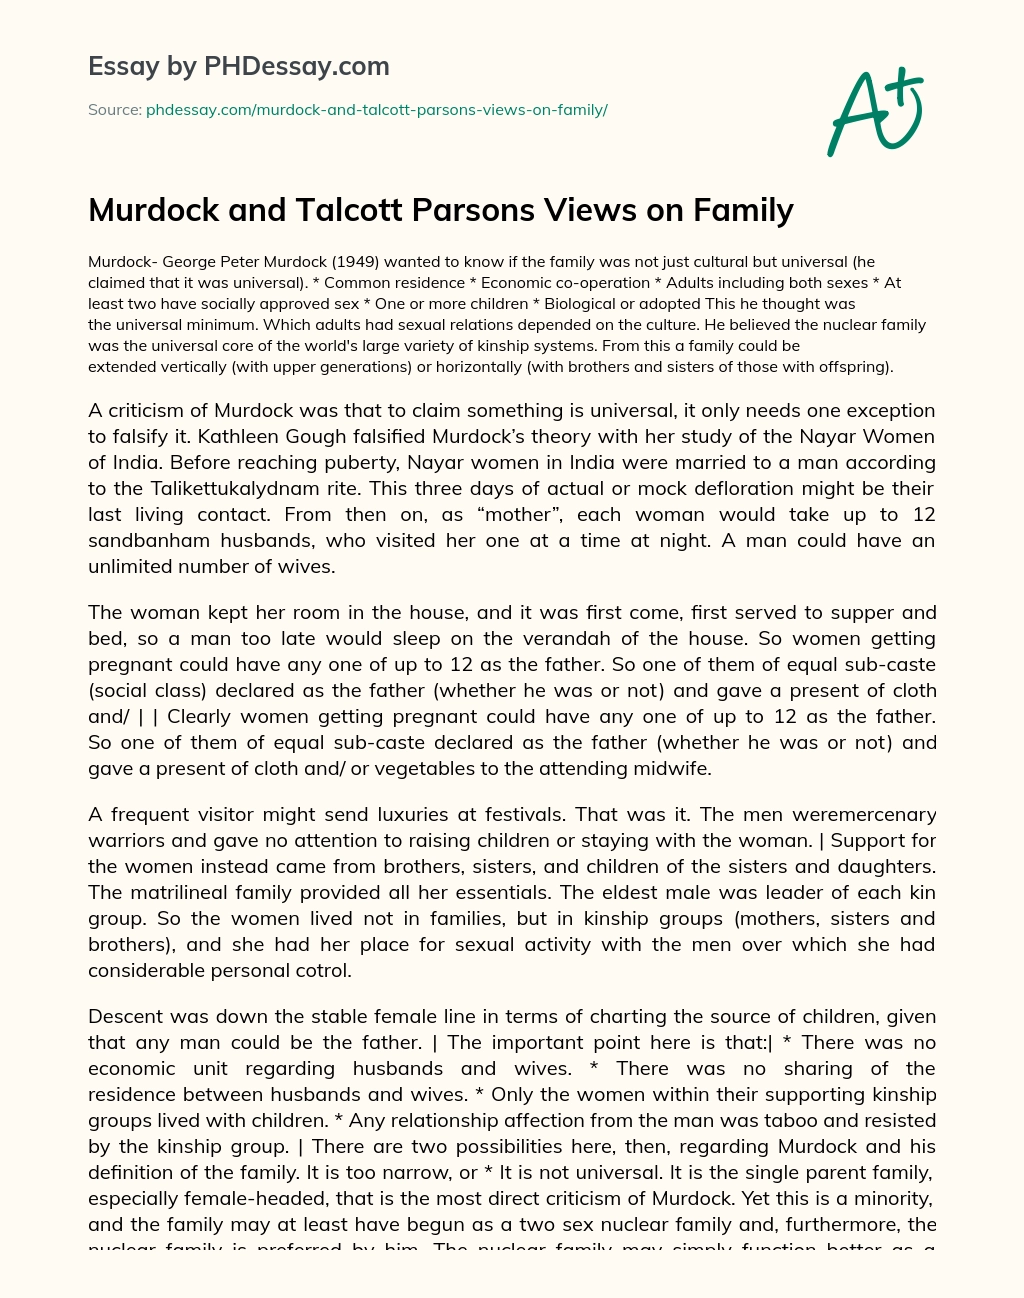 Murdock and Talcott Parsons Views on Family essay